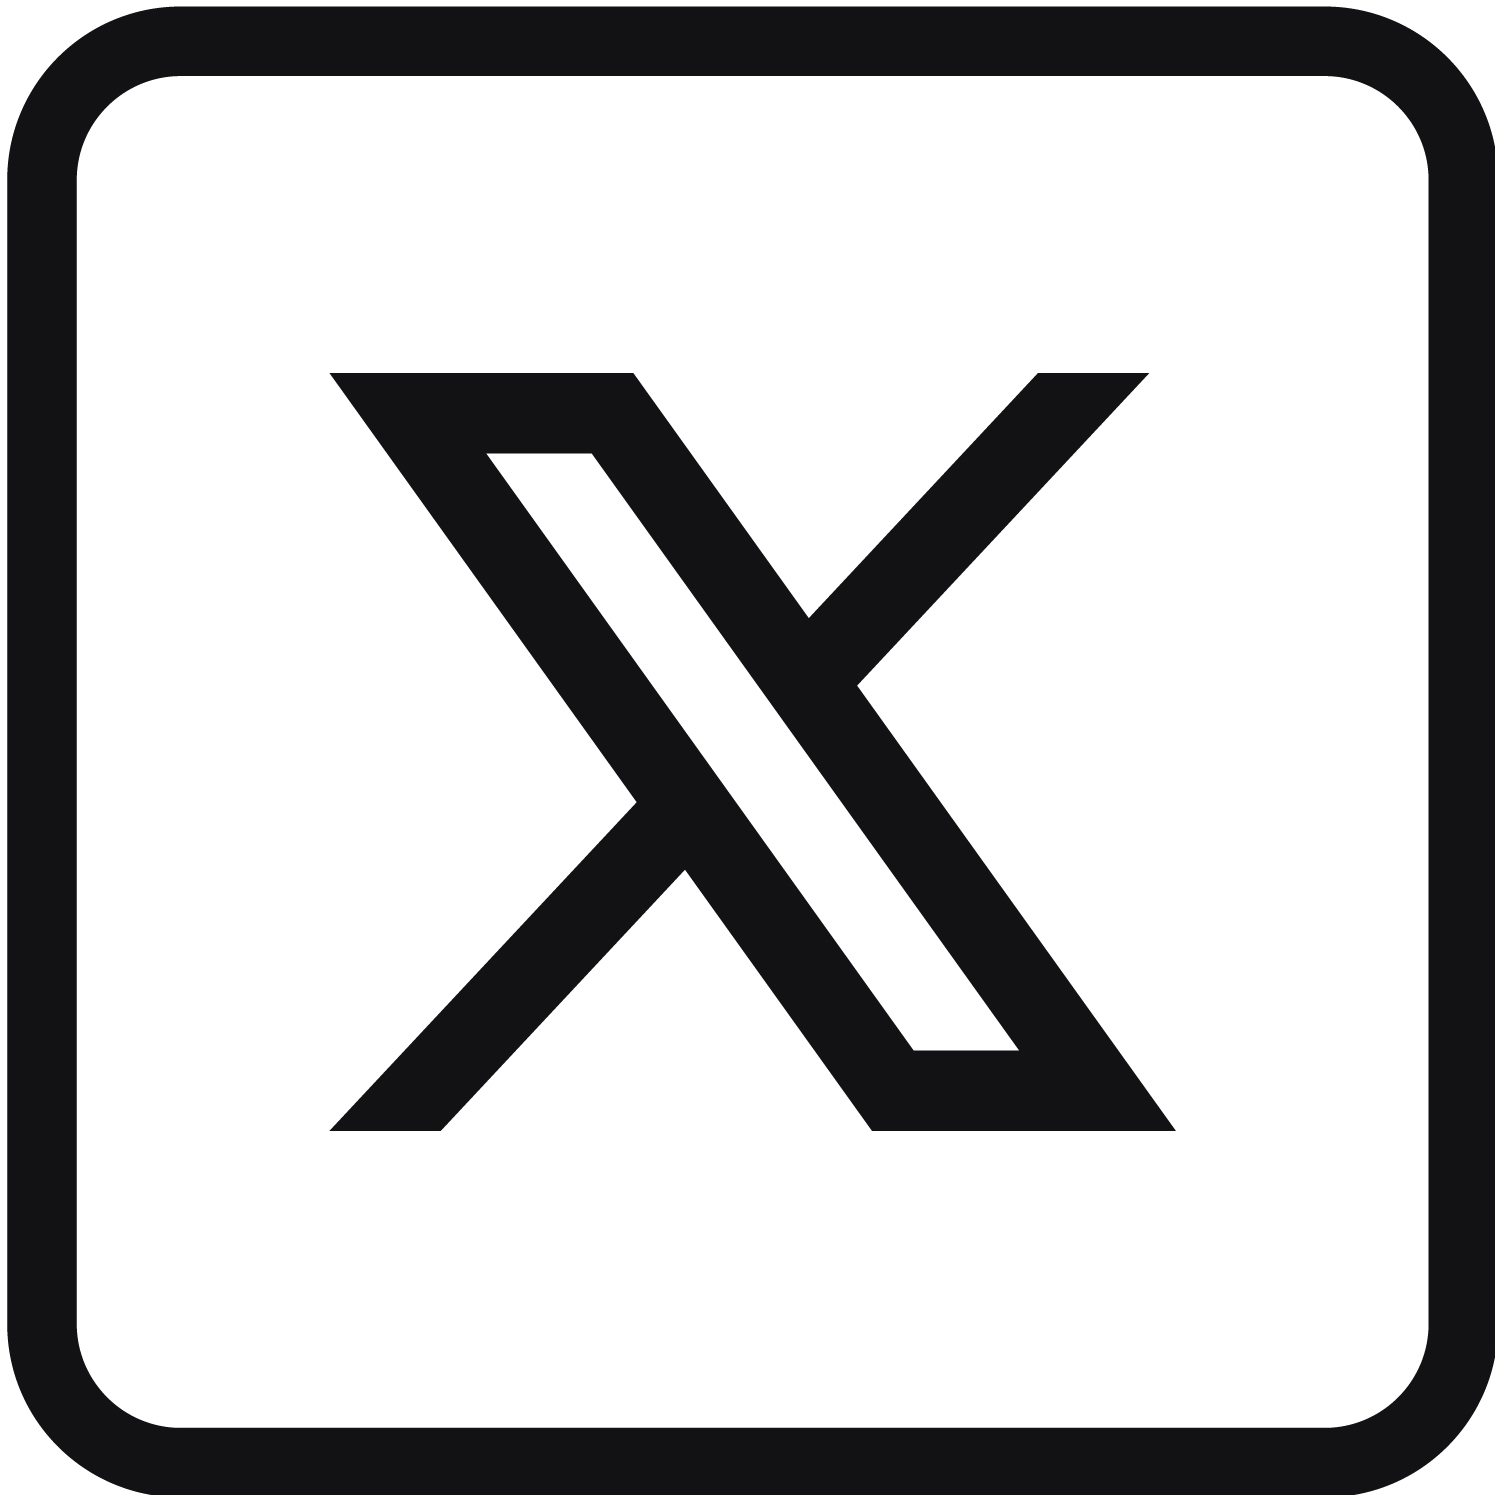 Logo Twitter X